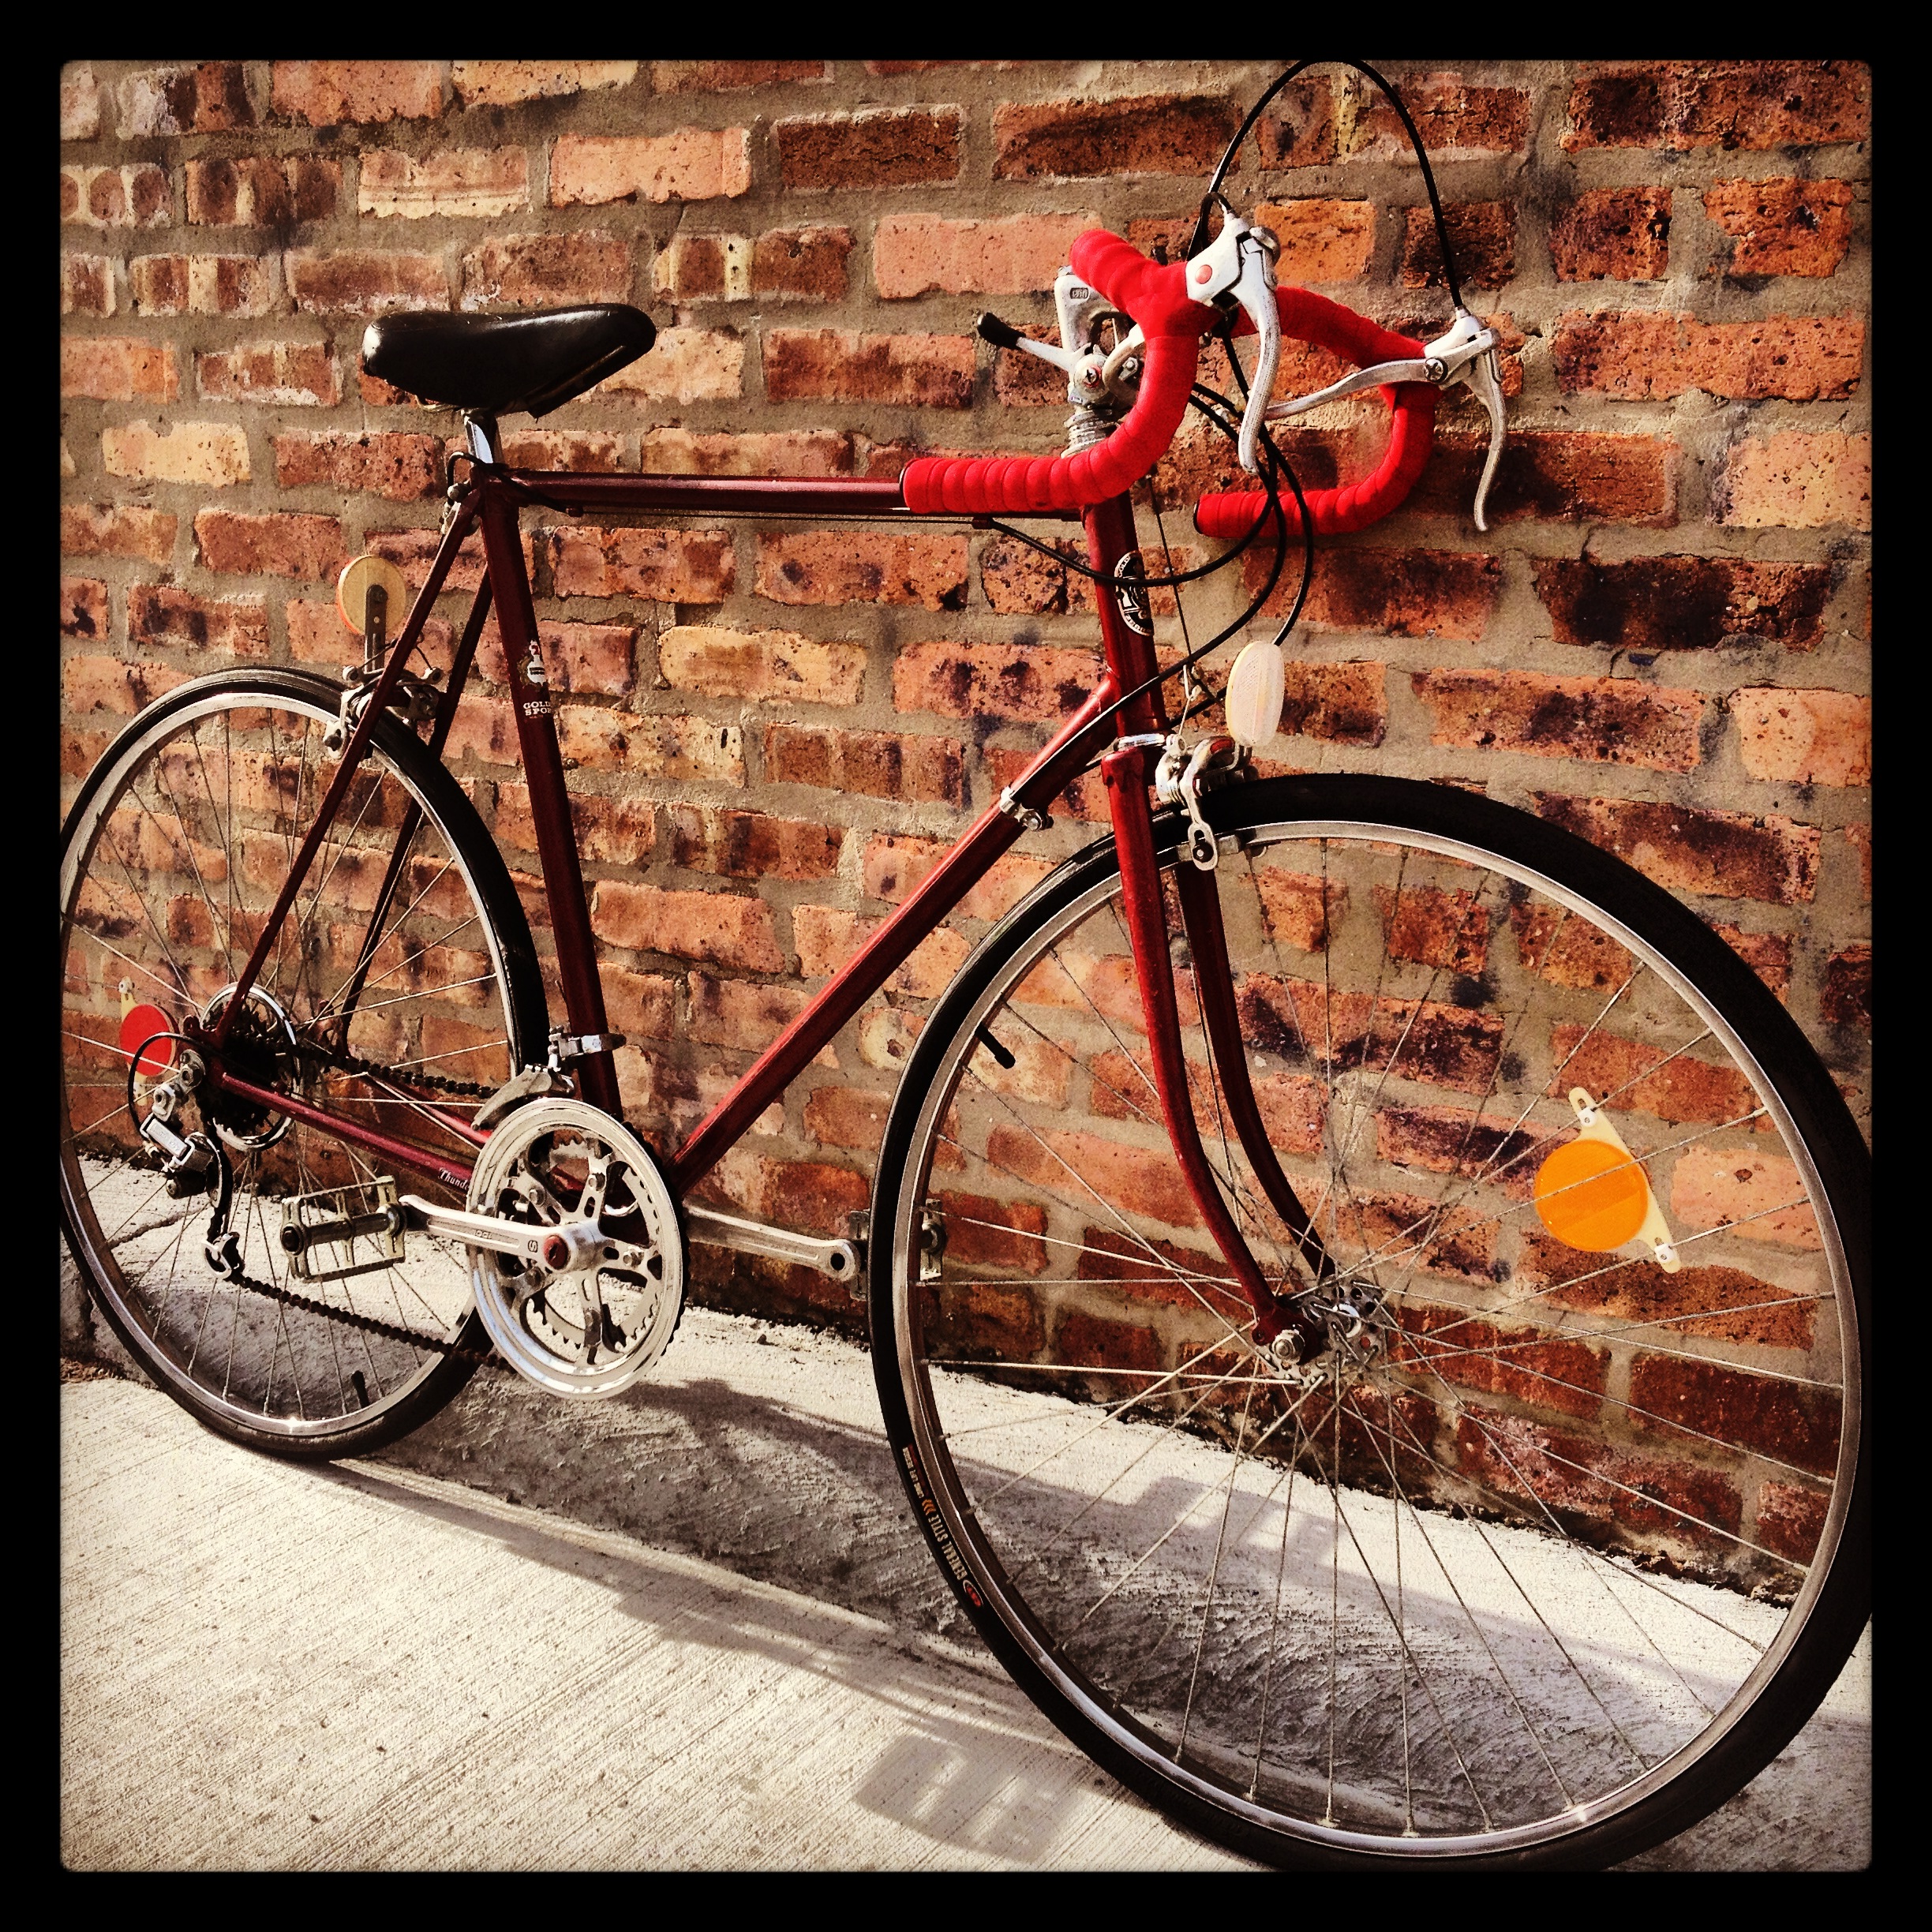 62cm bike frame